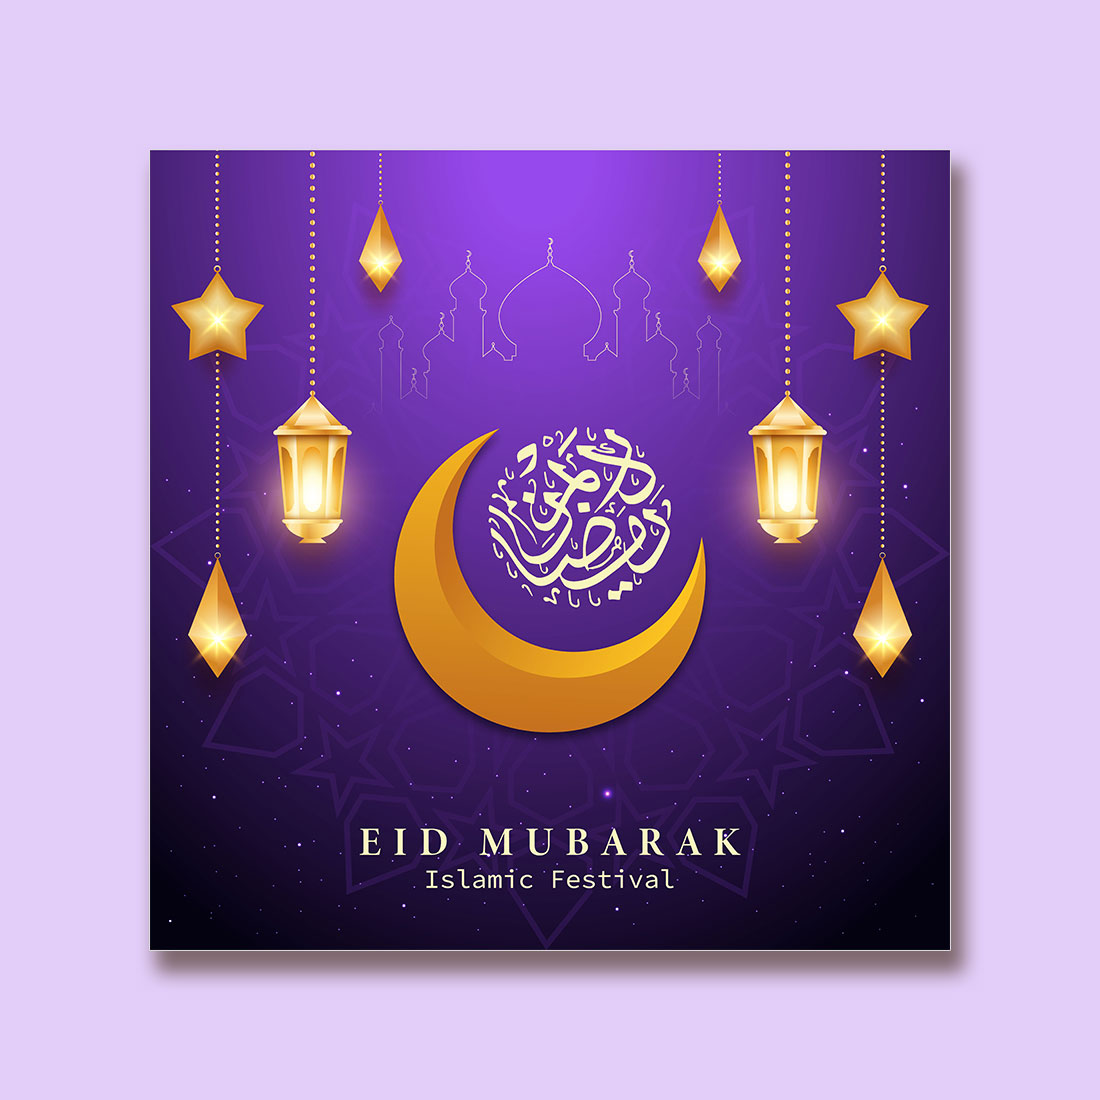 Eid Mubarak colorful luxury Islamic background with decorative Islamic ornament, eid Mubarak social media post design preview image.